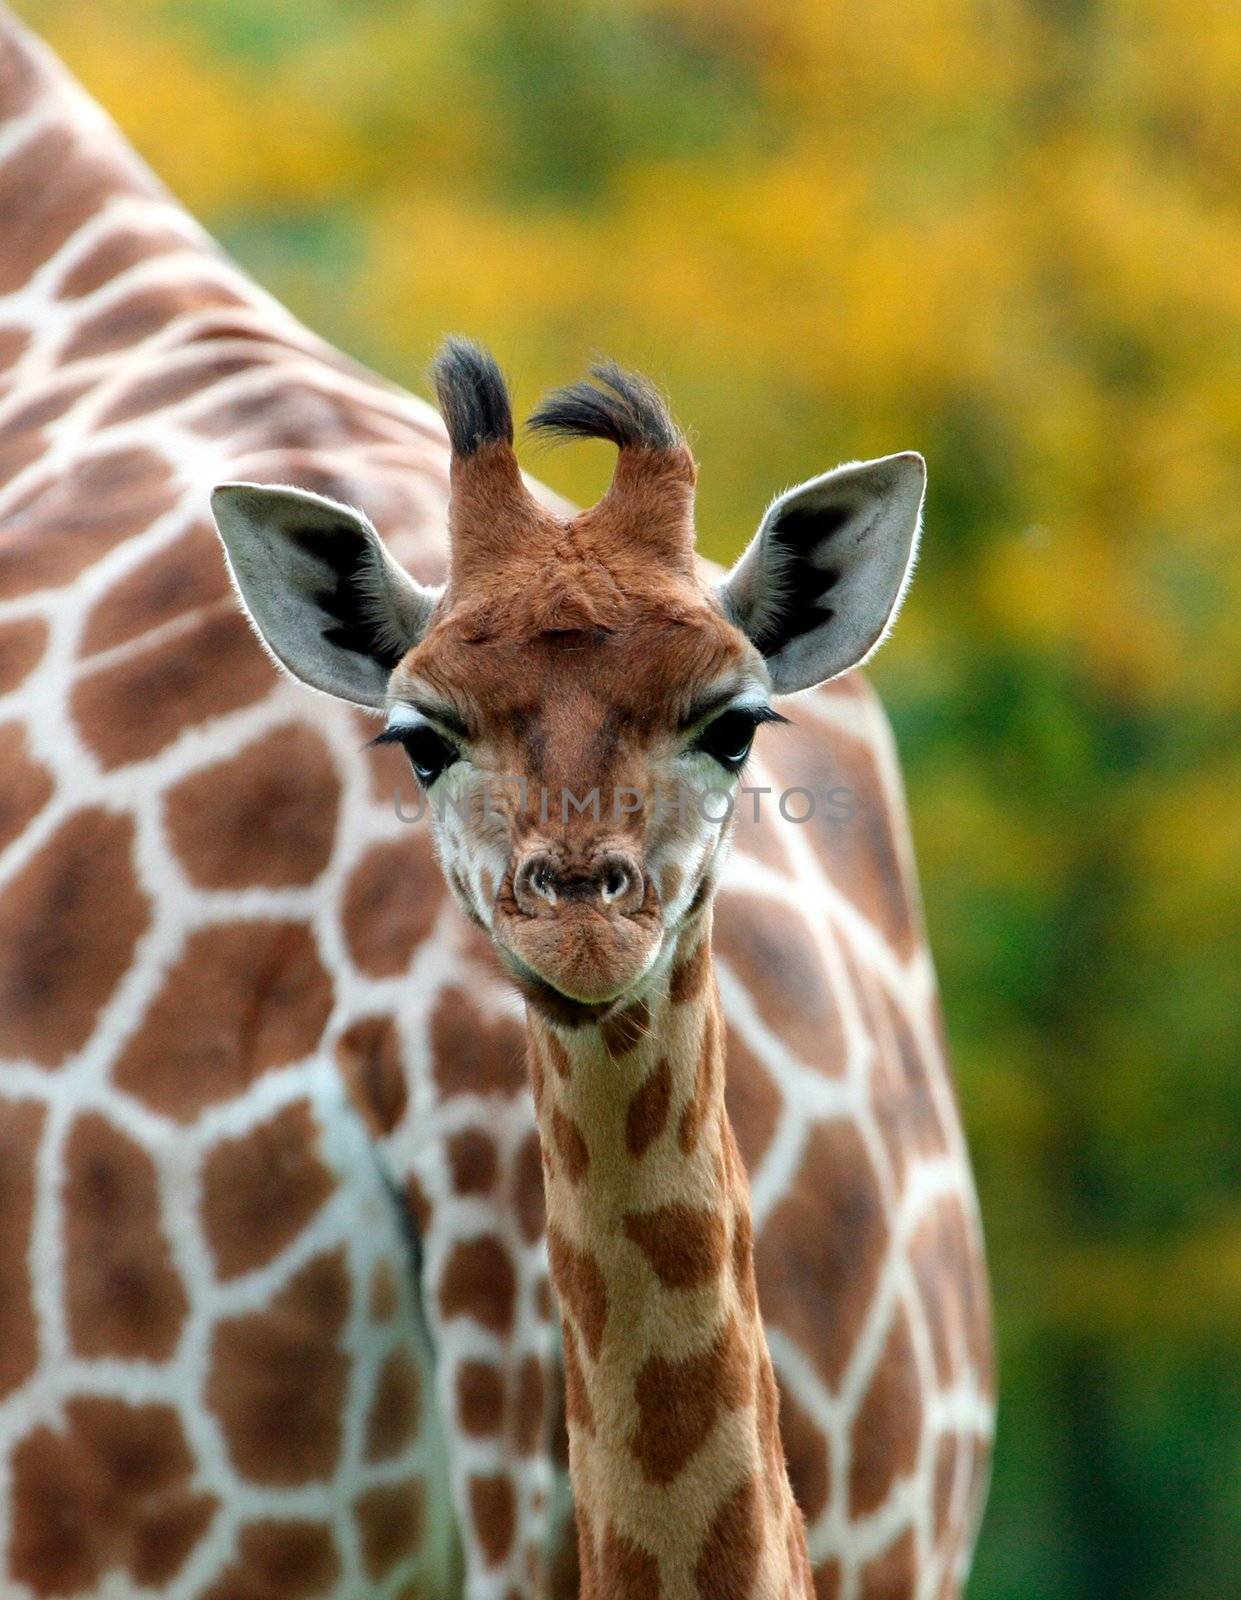 Portrait of a cute baby Giraffe in the wild.